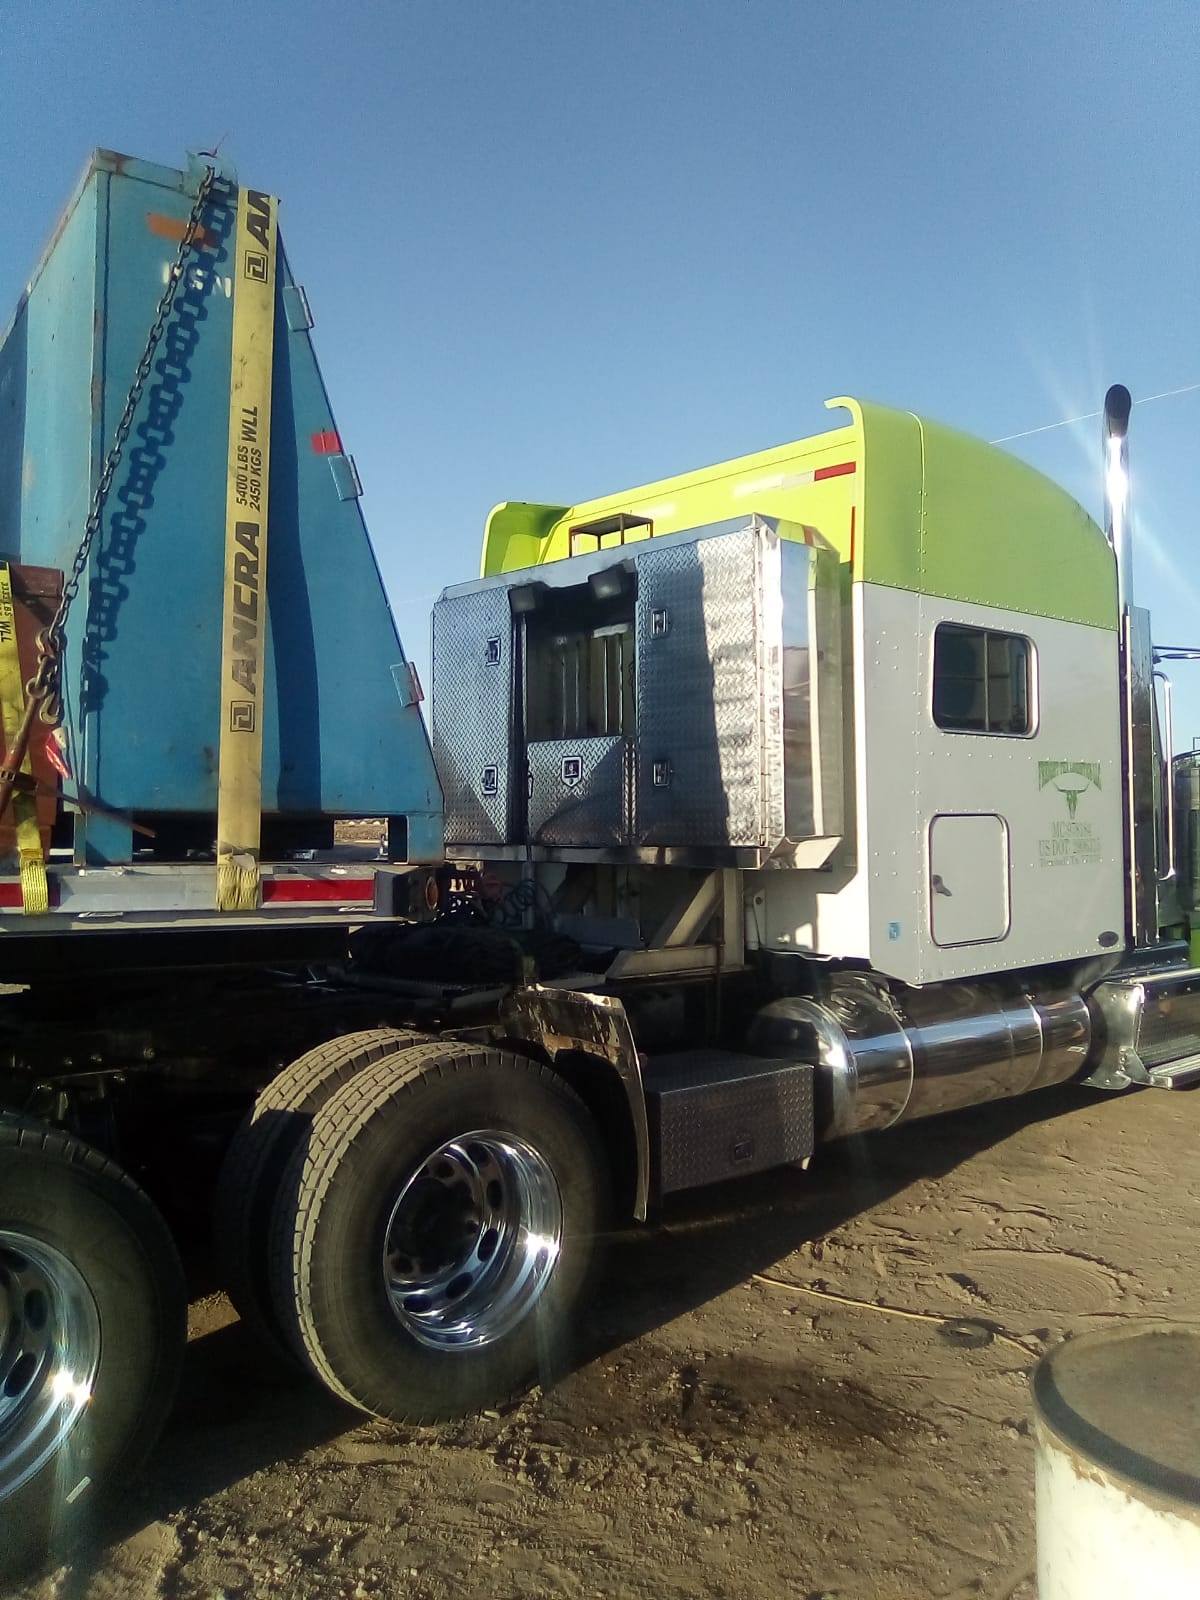 Eloy Show Truck Polishing 529 S Sunshine Blvd, Eloy Arizona 85131